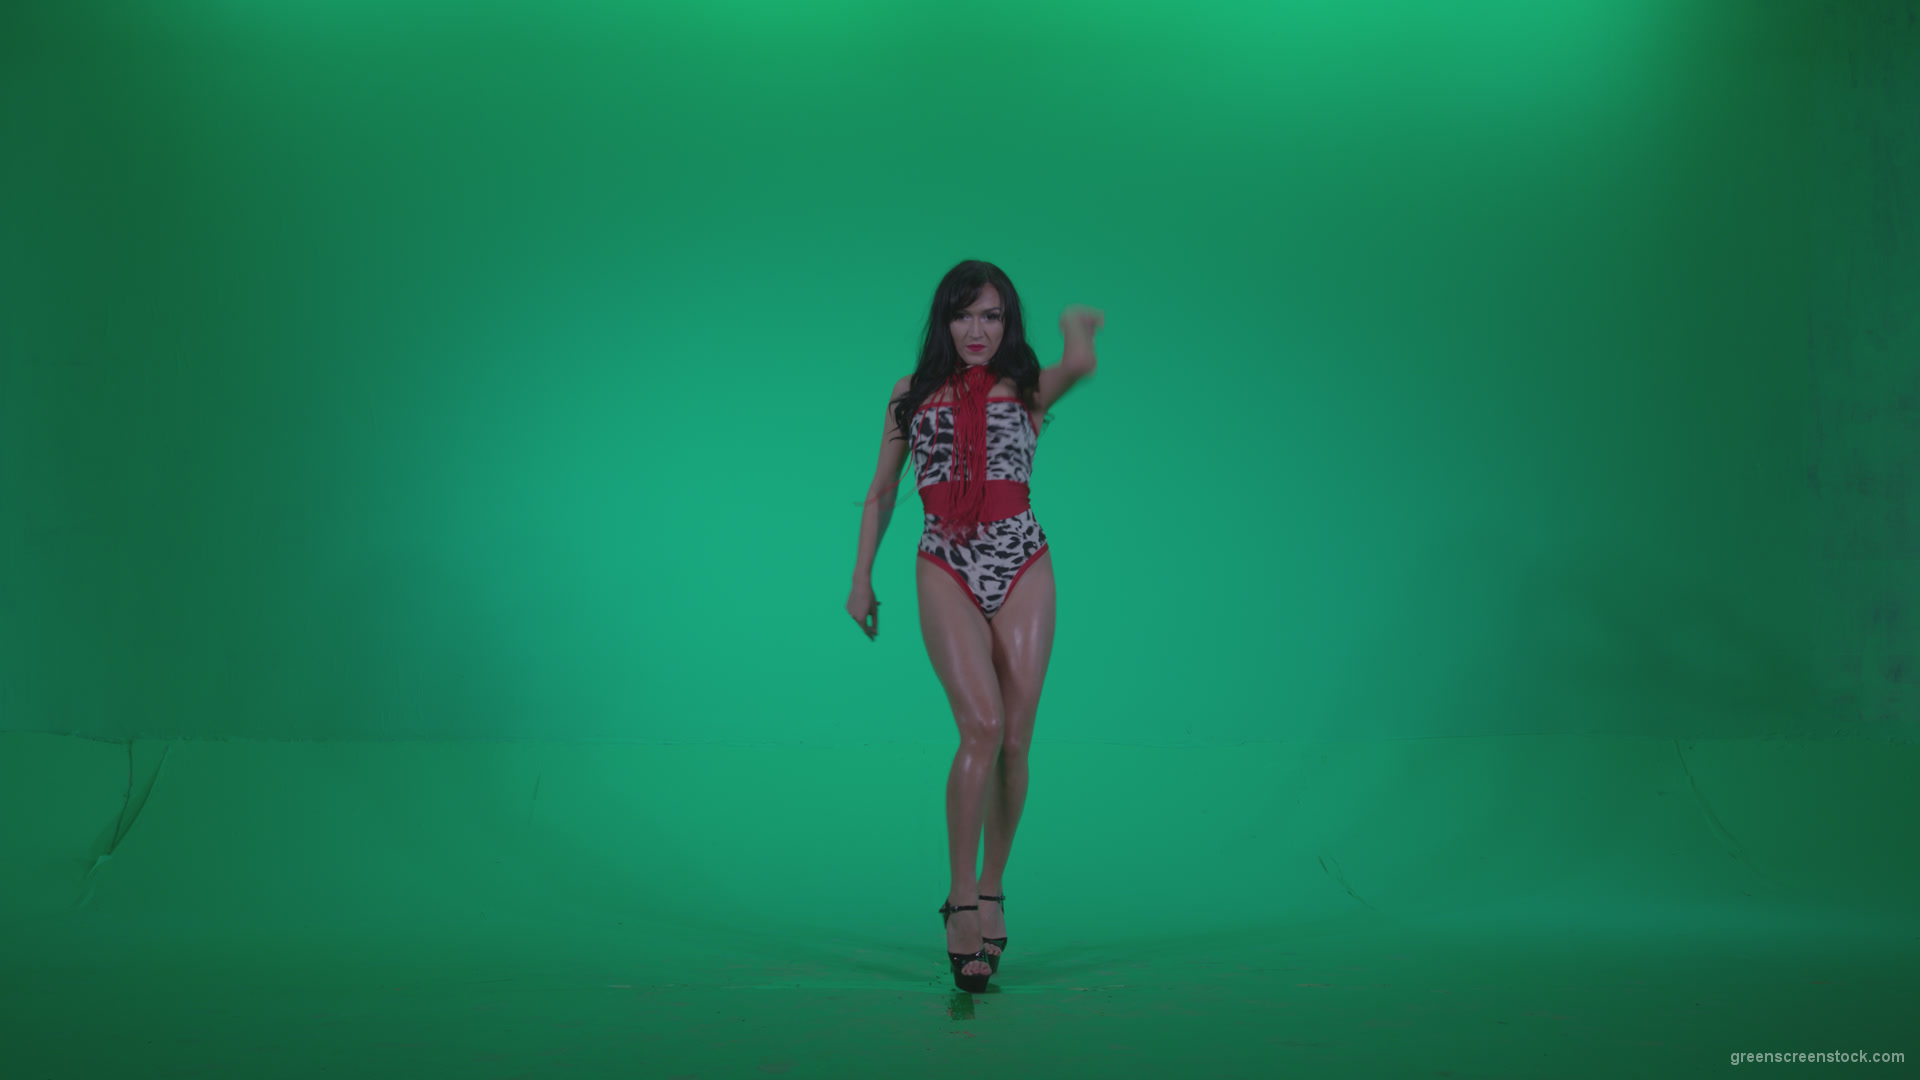 Go-go-Dancer-Red-Dress-r1-Green-Screen-Video-Footage_007 Green Screen Stock